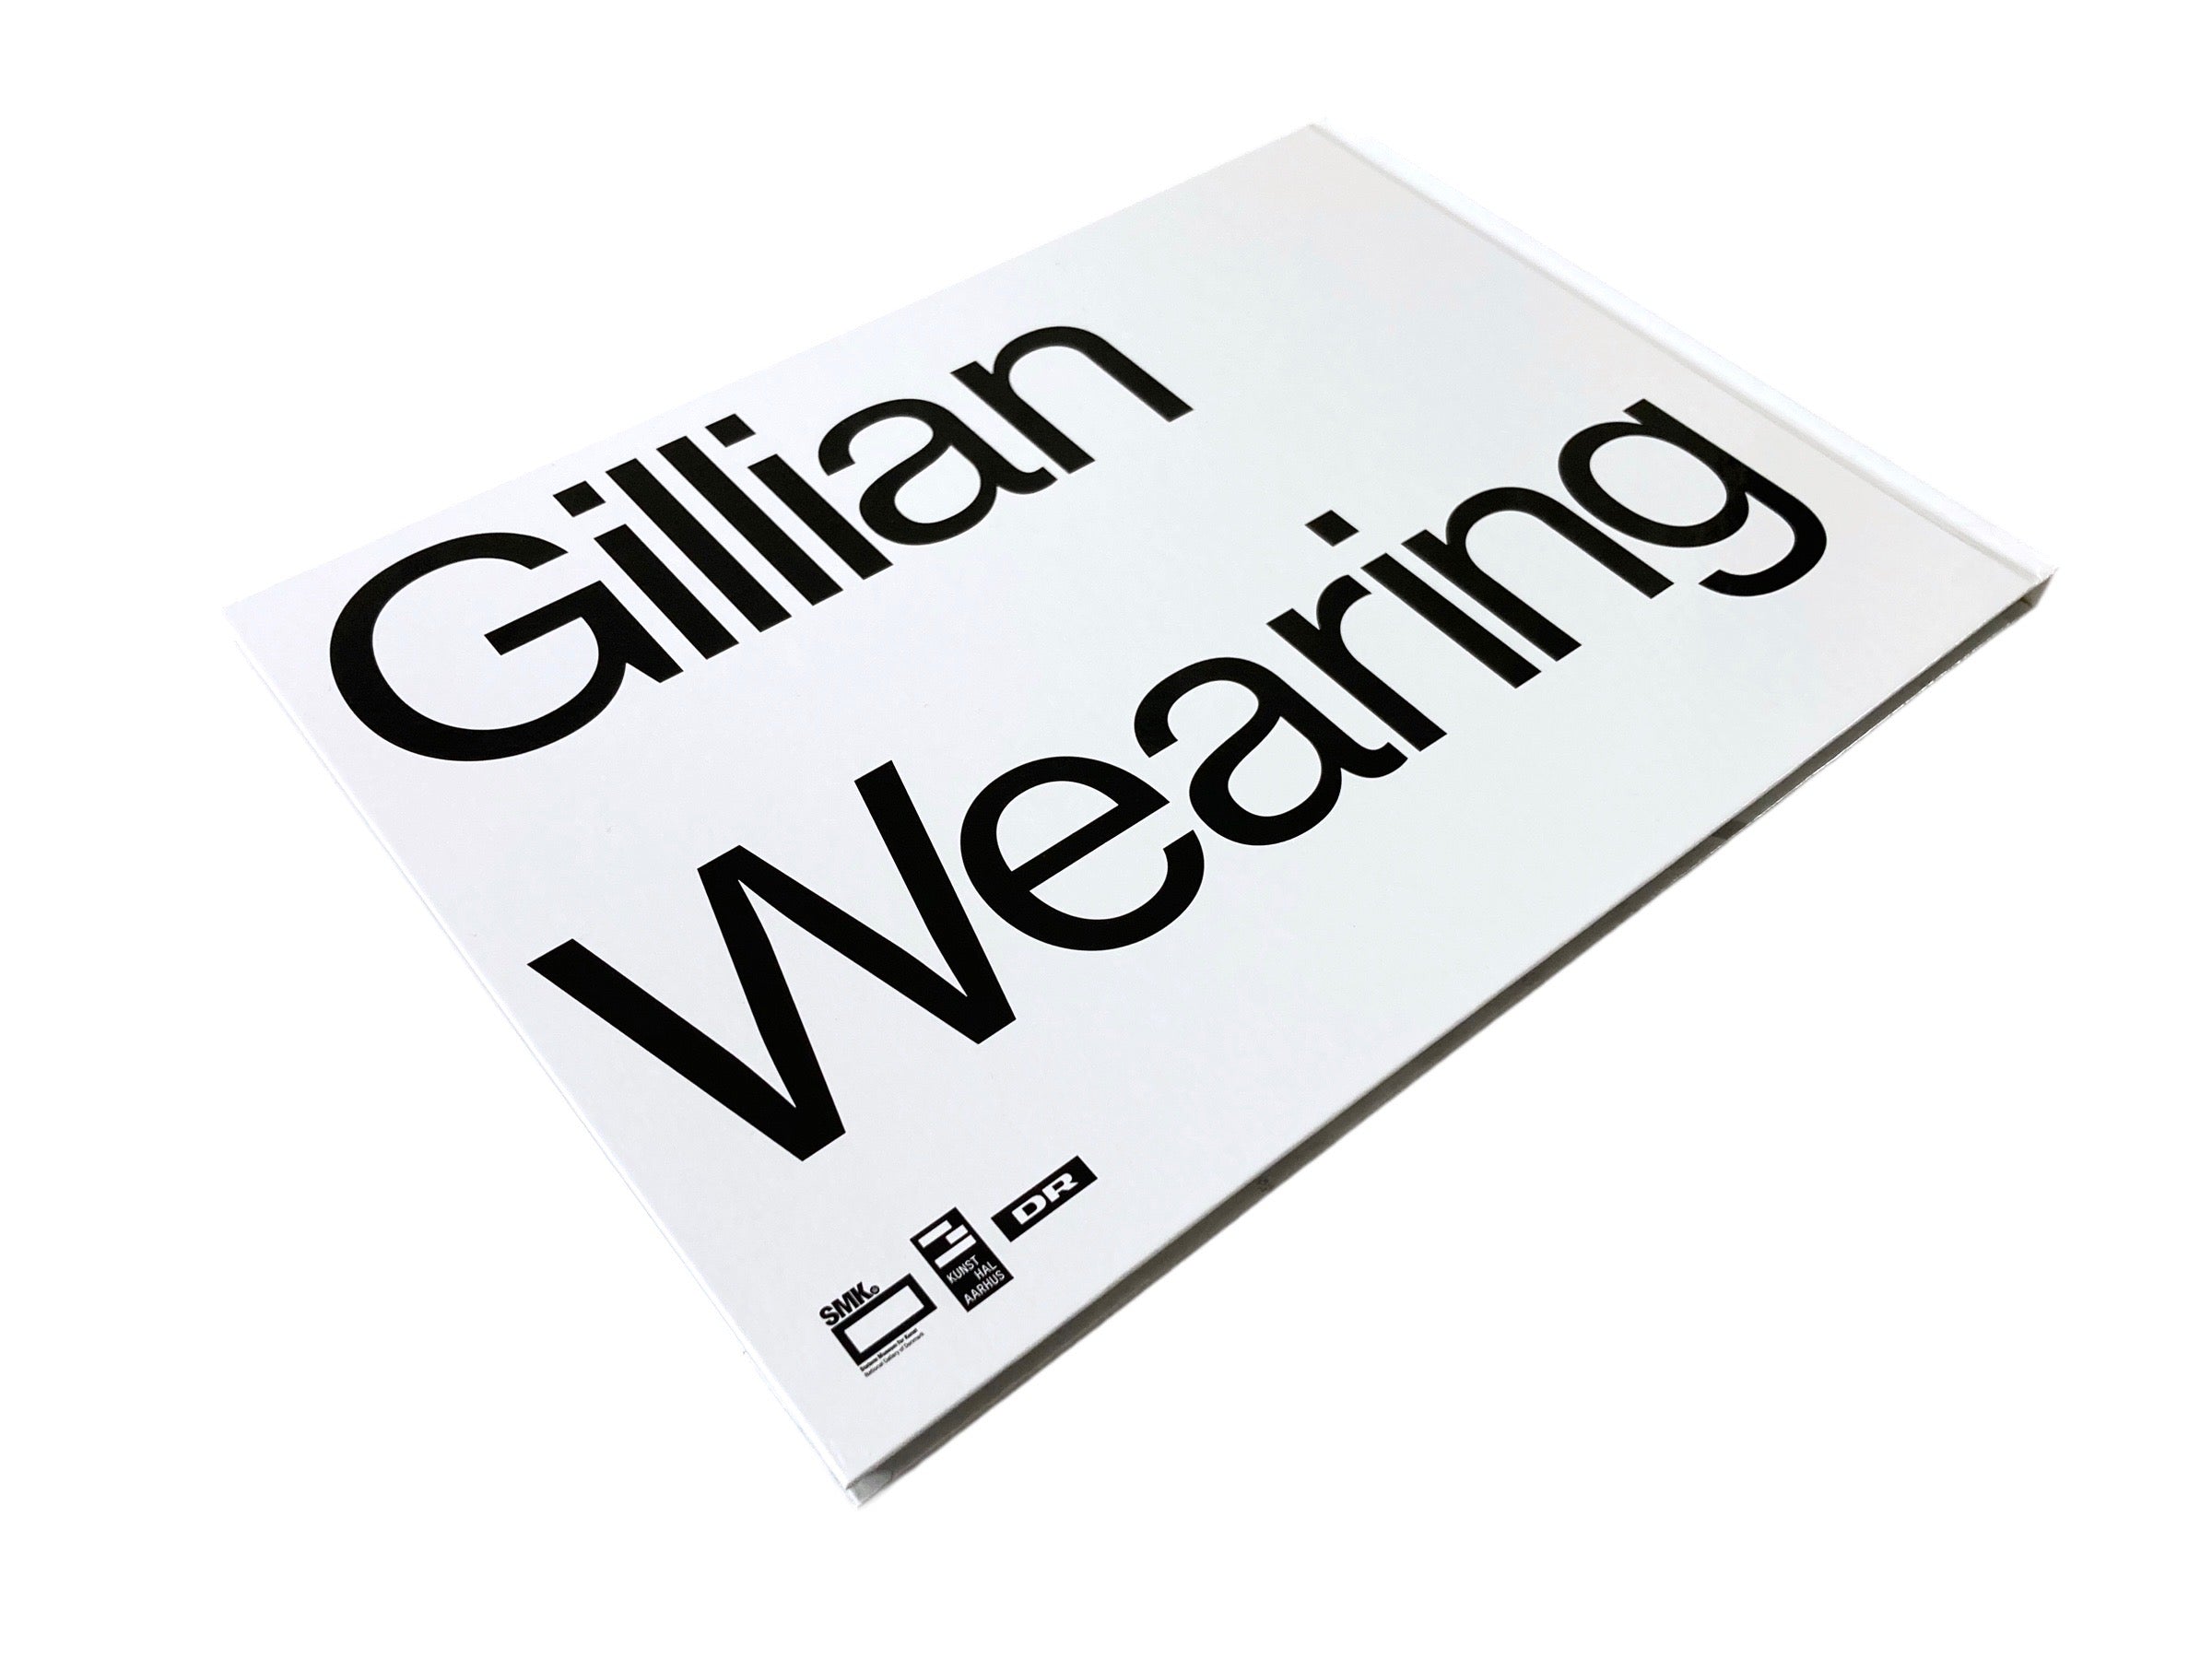 Gillian Wearing: Family Stories